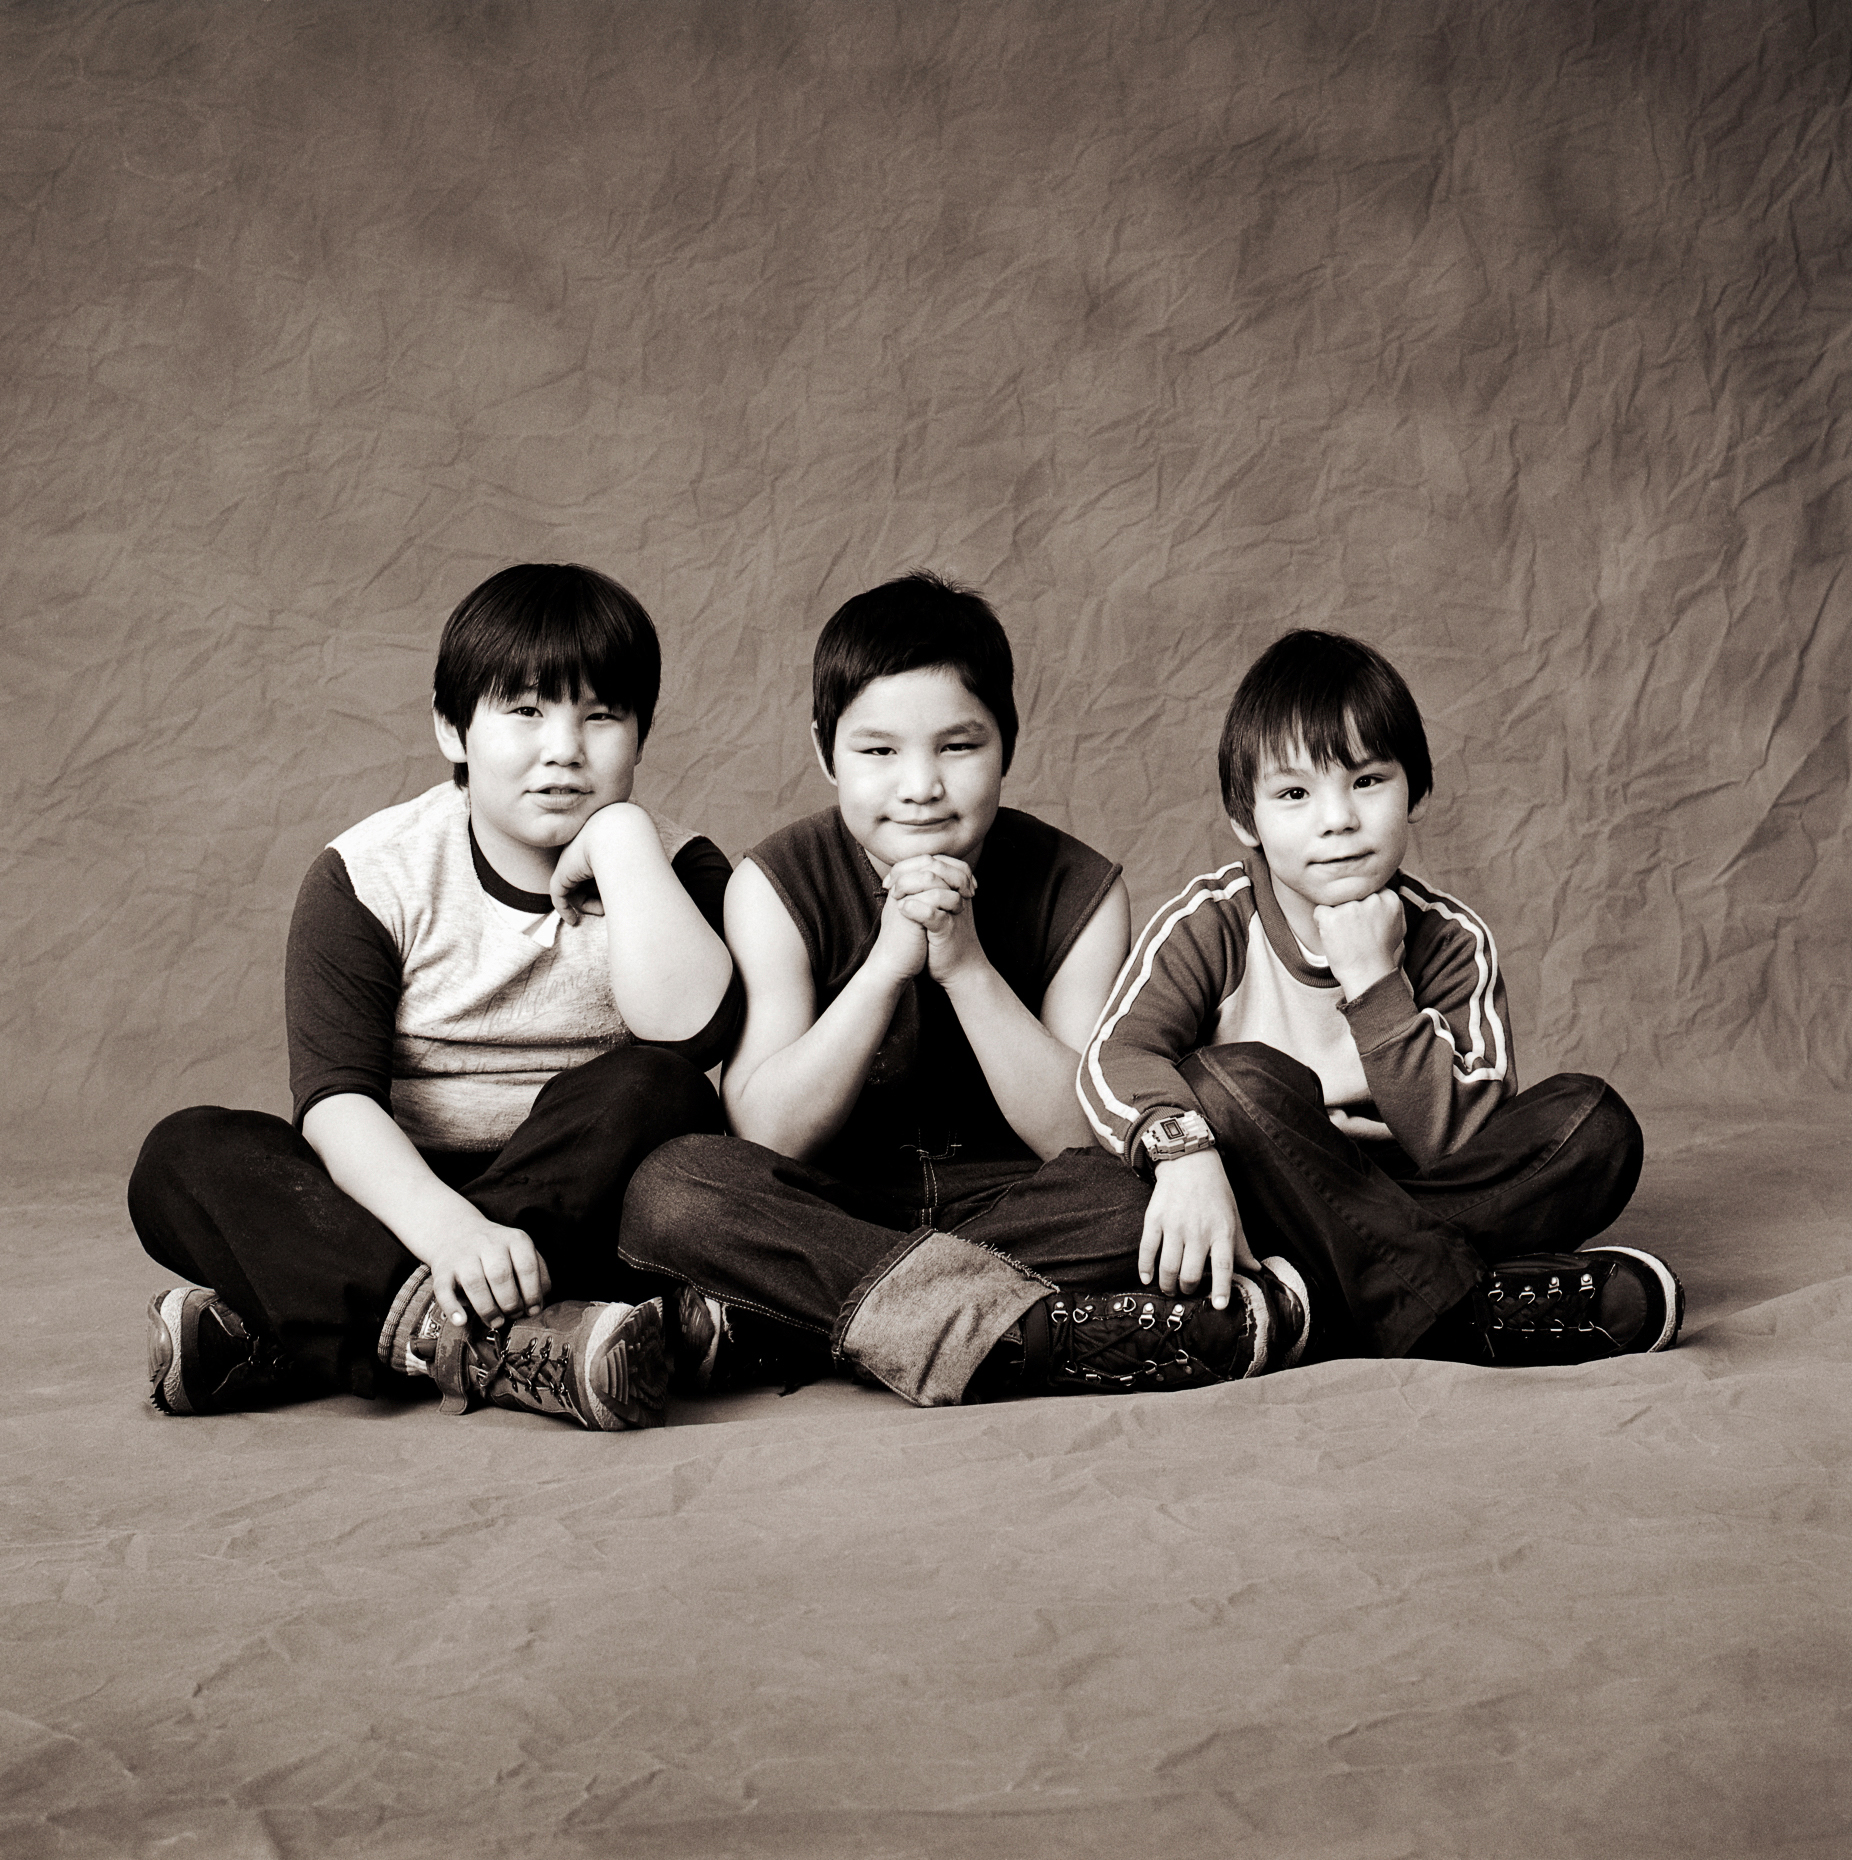 Black & white studio portrait of three Inuit boys in a photography studio in Iqaluit, Nunavut, Canada